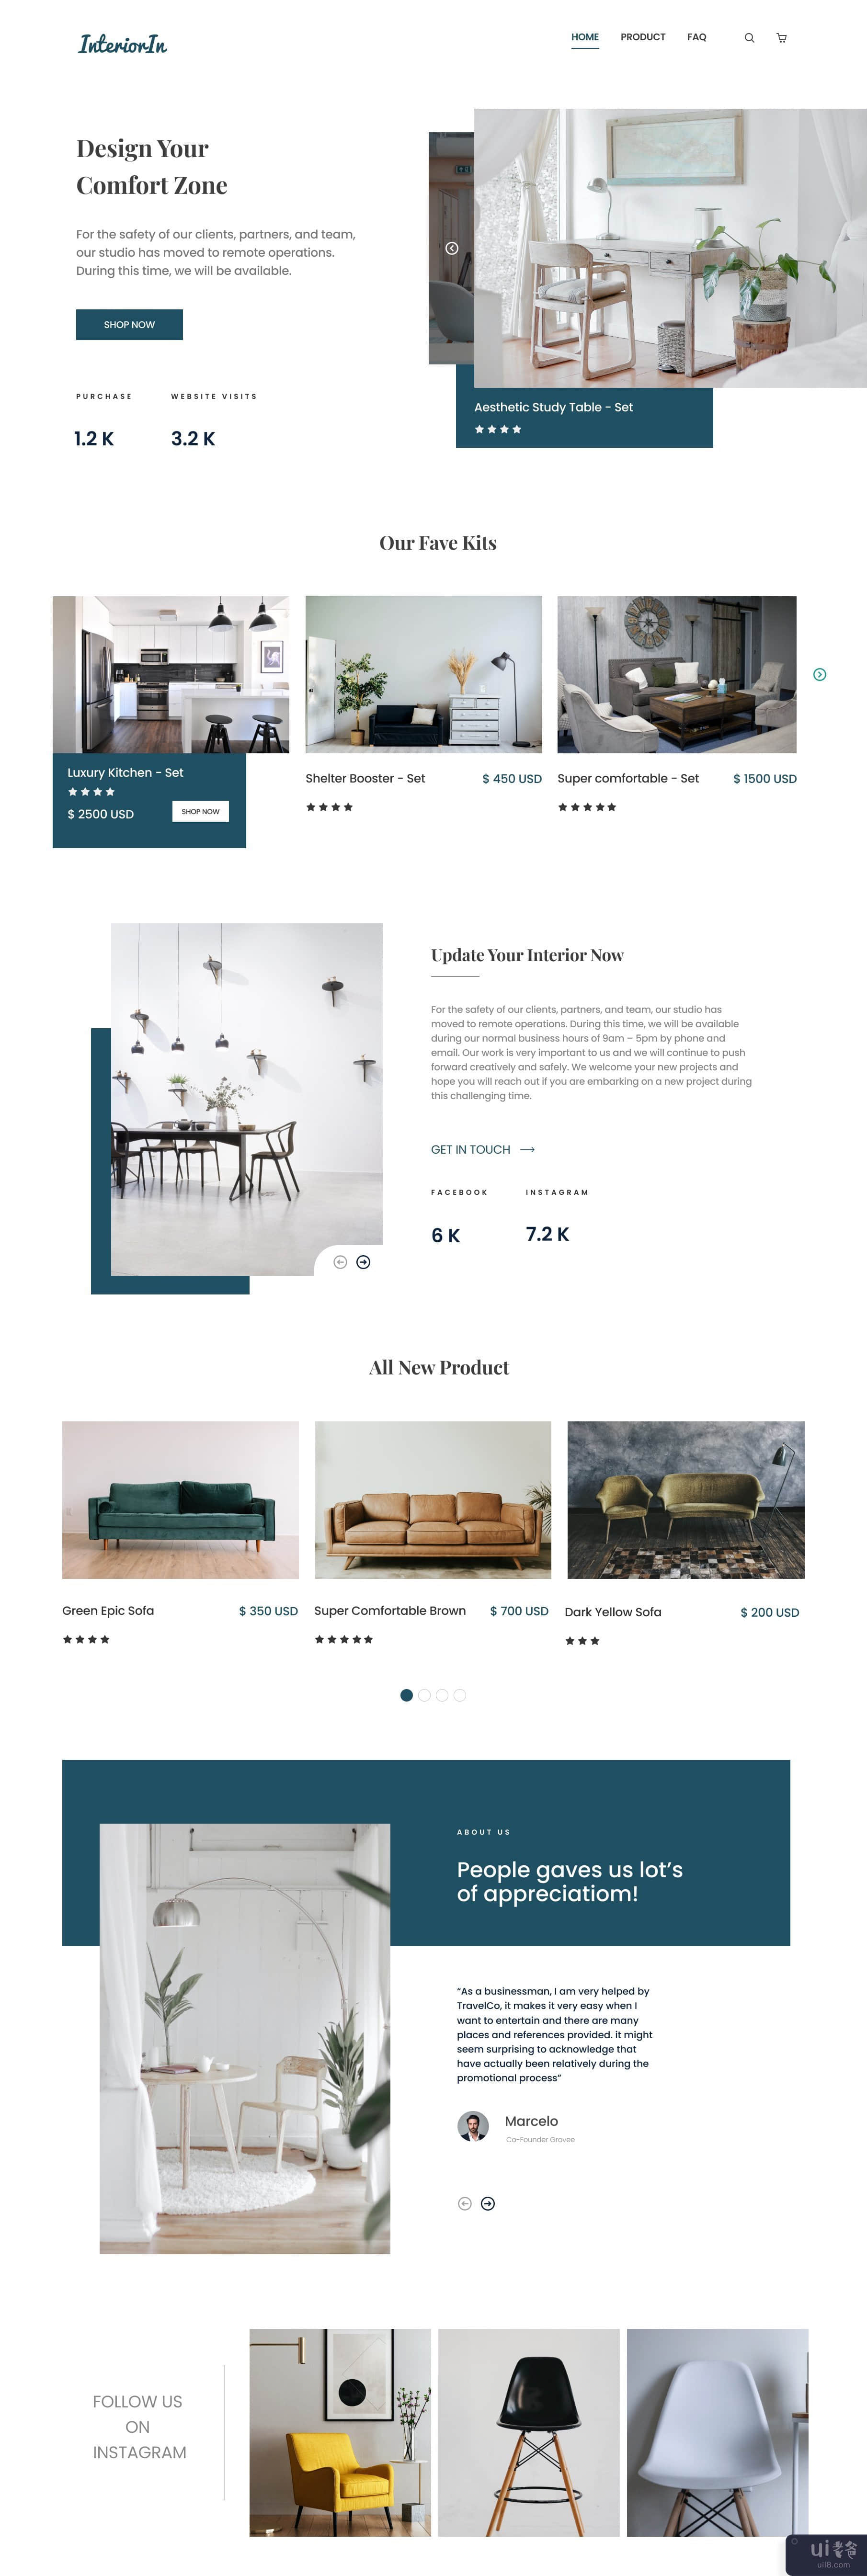 室内家具网站概念(Interior Furniture Website Concept)插图